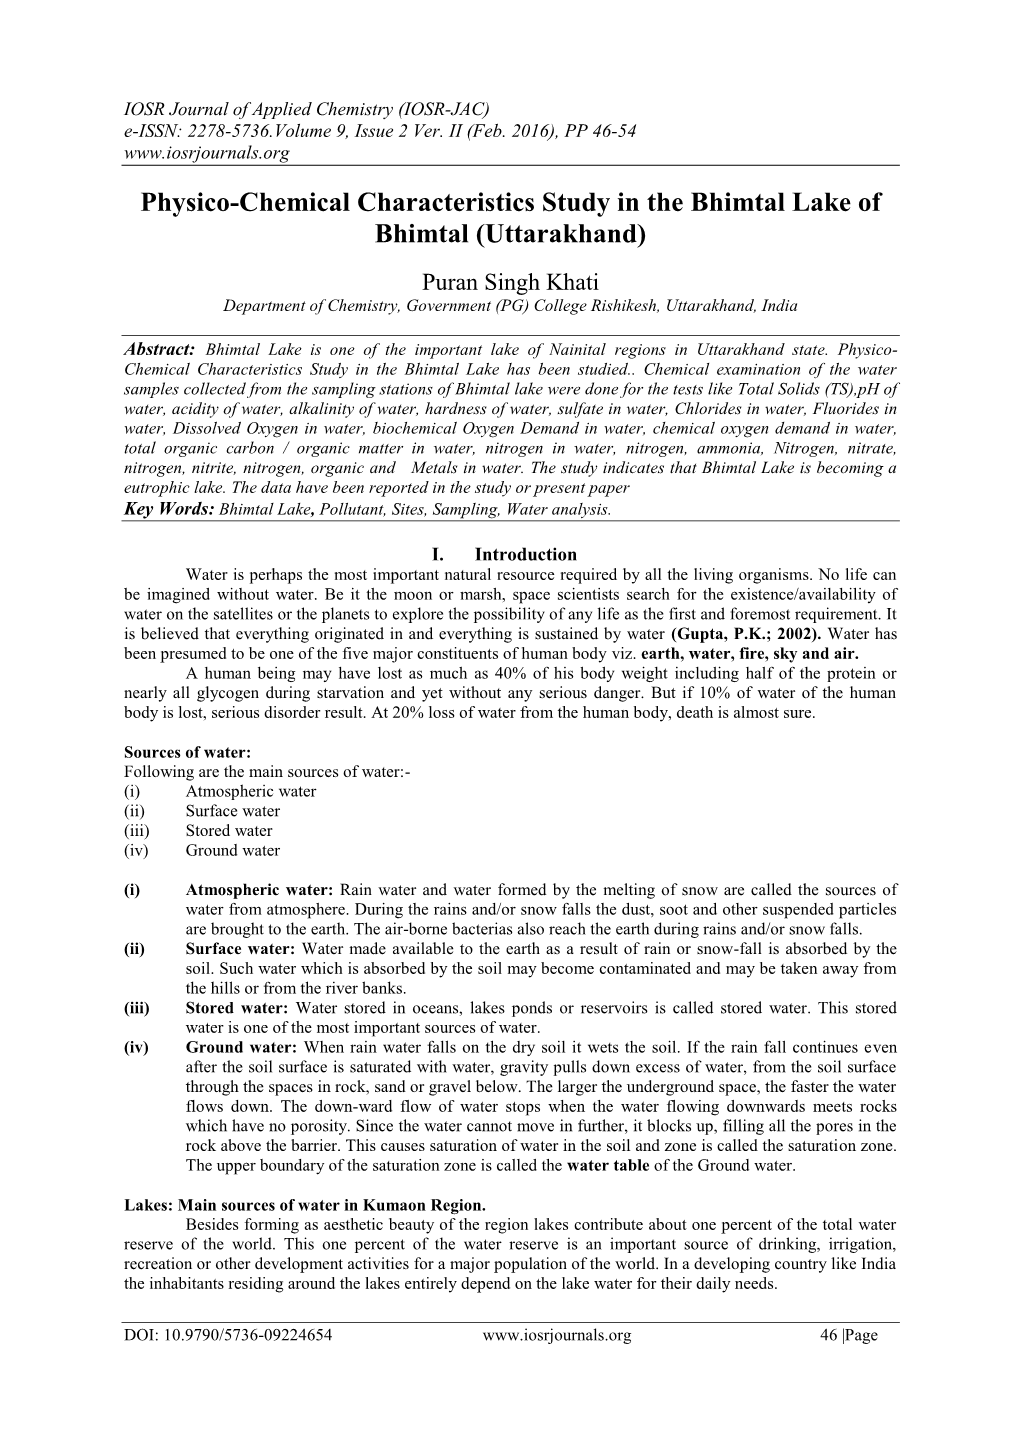 Physico-Chemical Characteristics Study in the Bhimtal Lake of Bhimtal (Uttarakhand)